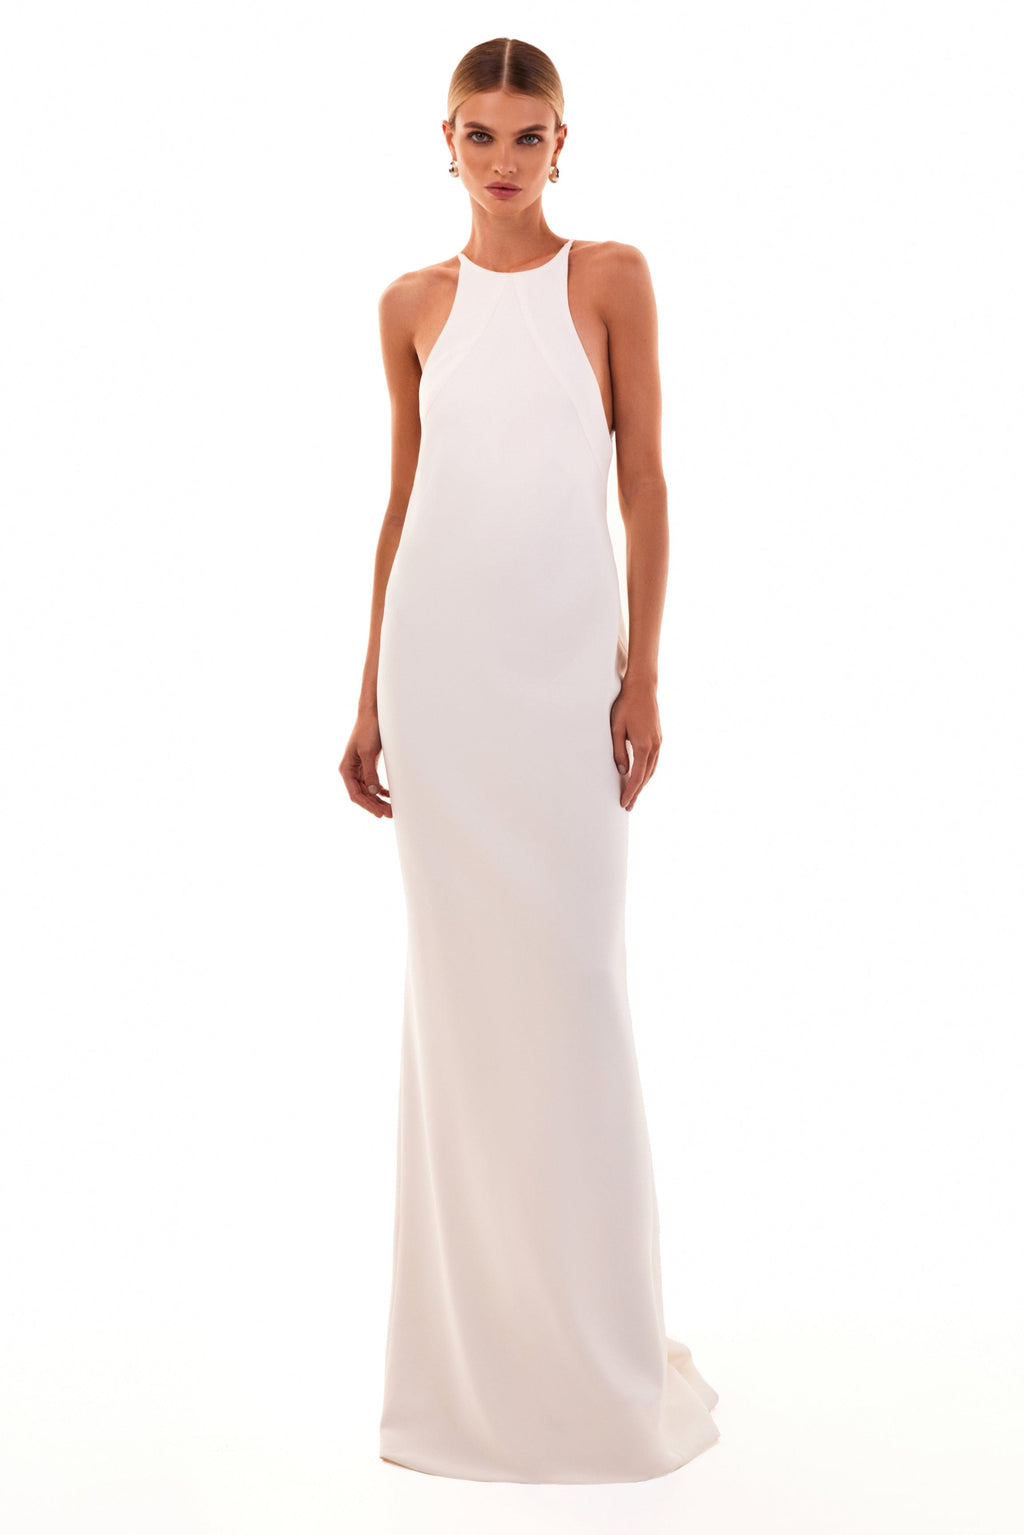 Lustrous white halterneck maxi dress